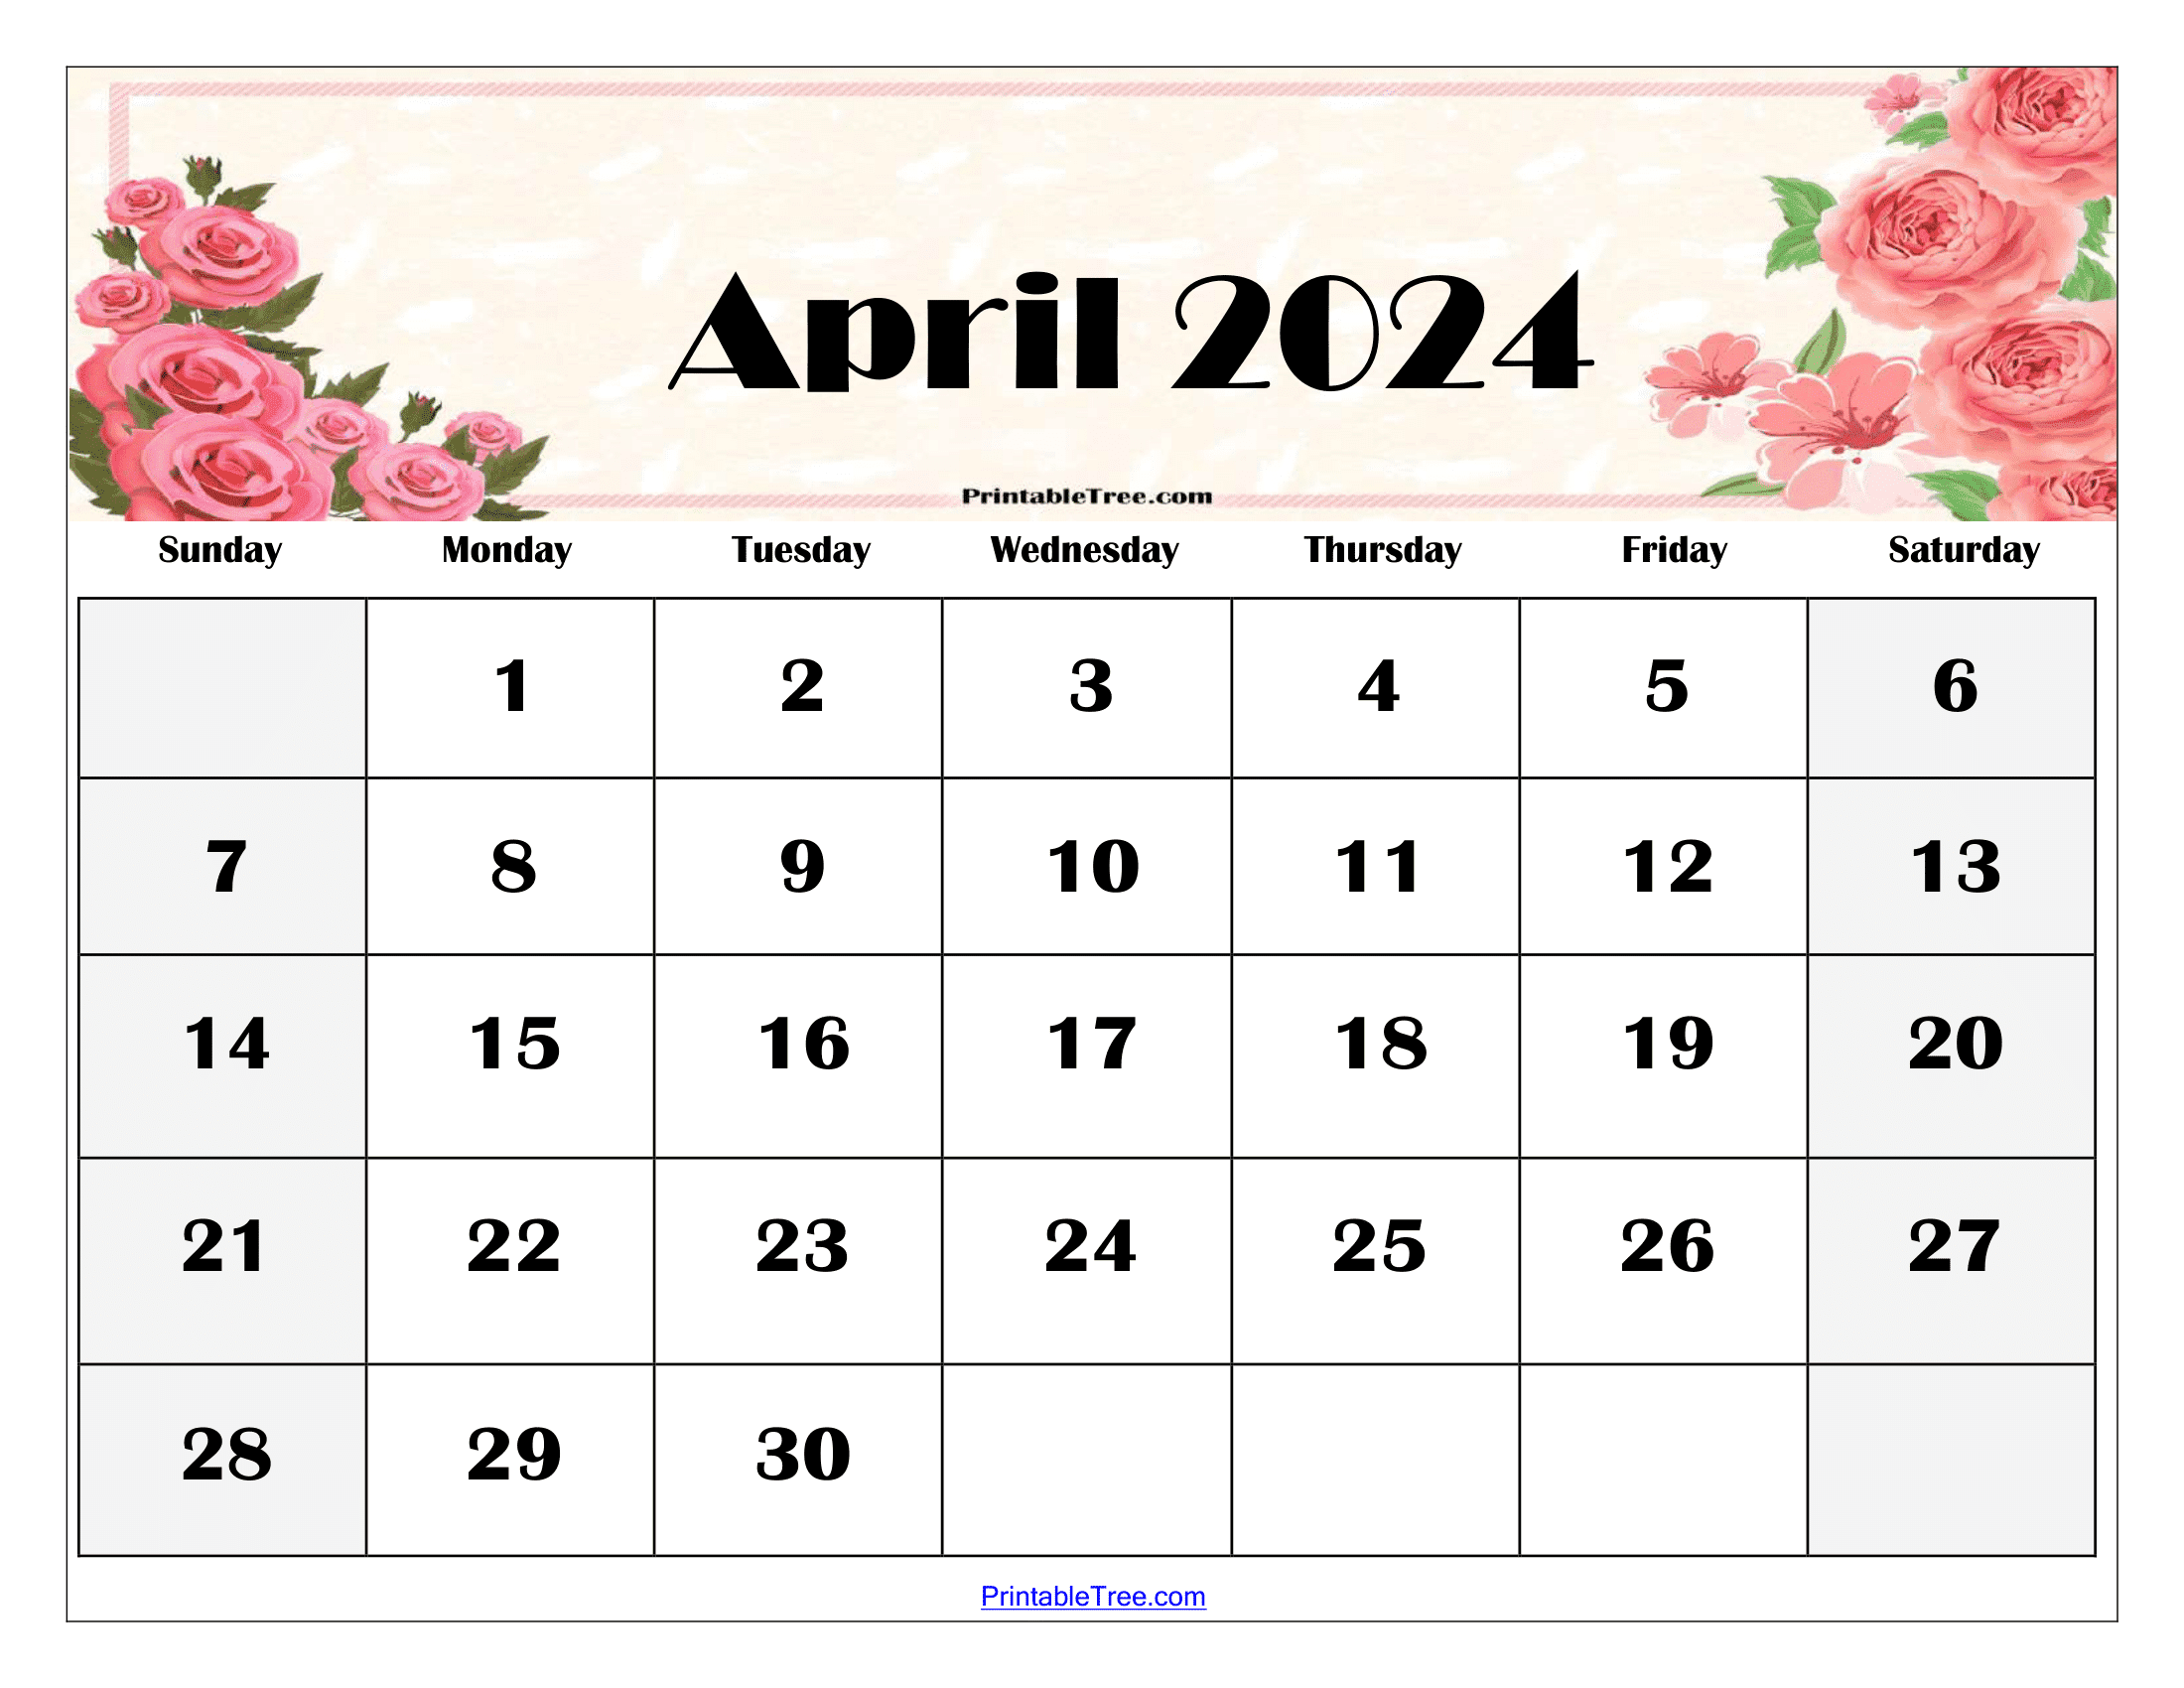 April 2024 Calendar Printable April Blank Calendar 2024 Easy To Use - Free Printable 2024 April Calendar